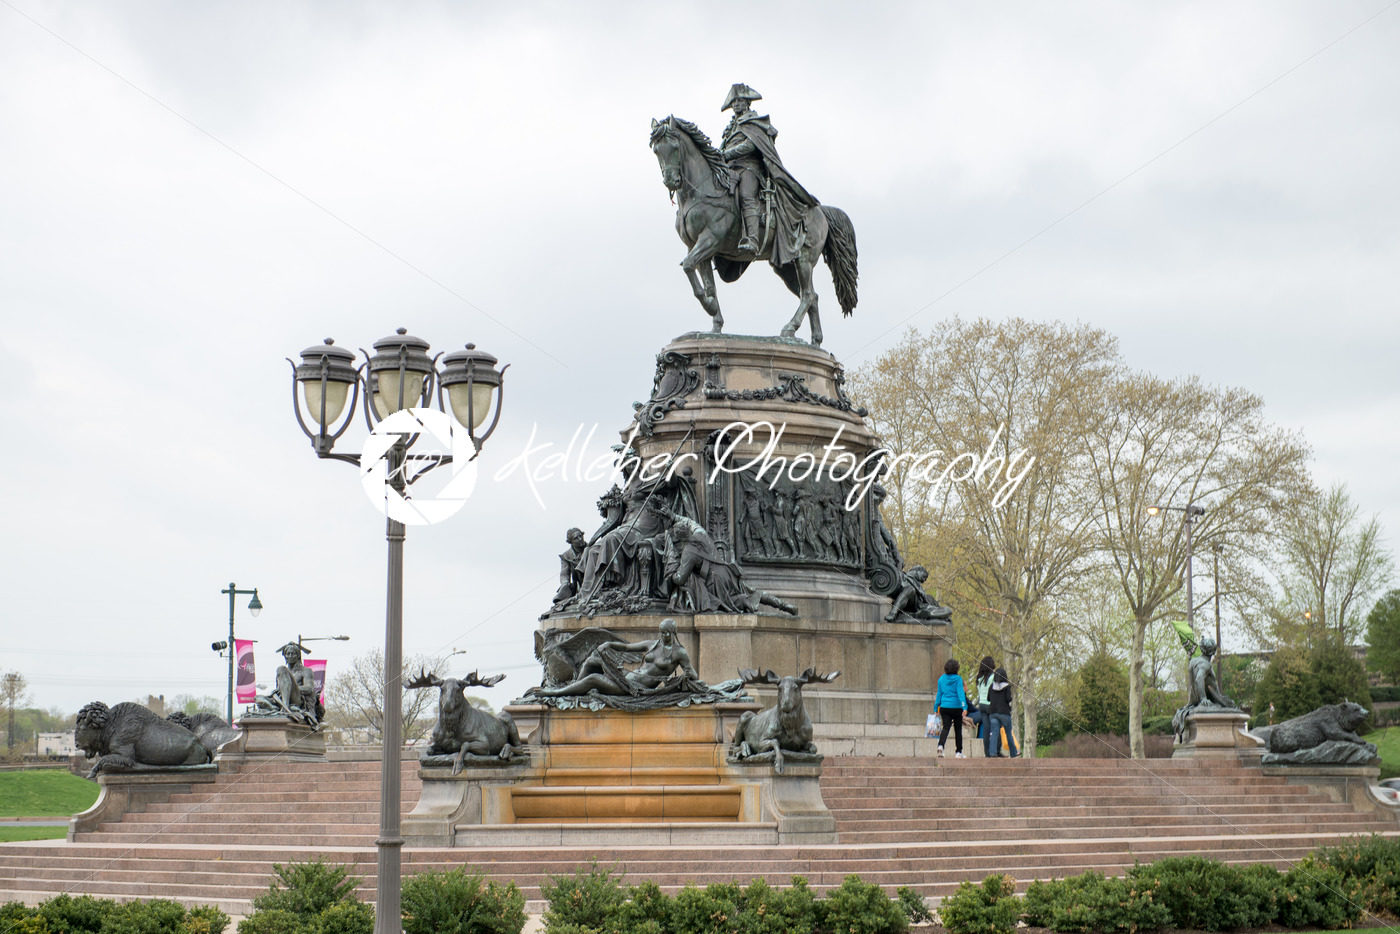 PHILADELPHIA, USA – JUNE 12, 2013: George Washington monument in Philadelphia. The statue designed in 1897 by Rudolf Siemering 1835-1905. - Kelleher Photography Store